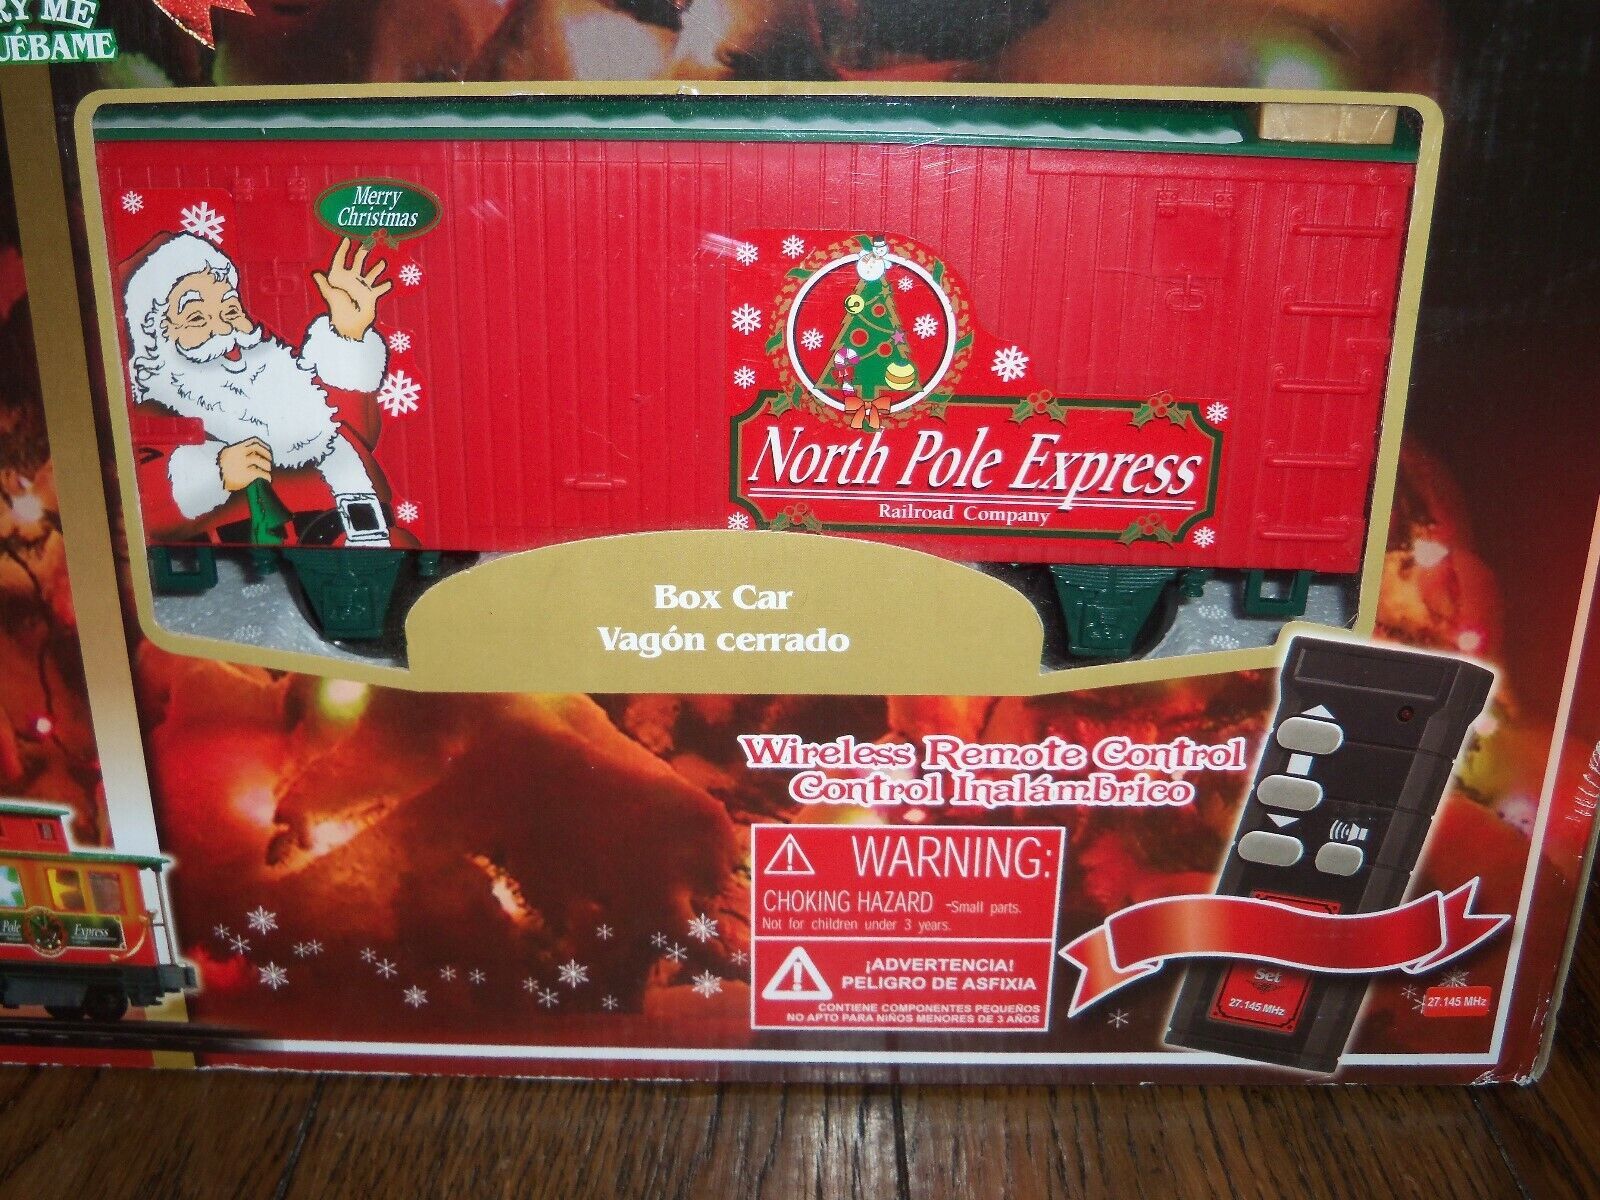 Box Car from North Pole Express Christmas Train Set EZTEC 37297 - $21.99